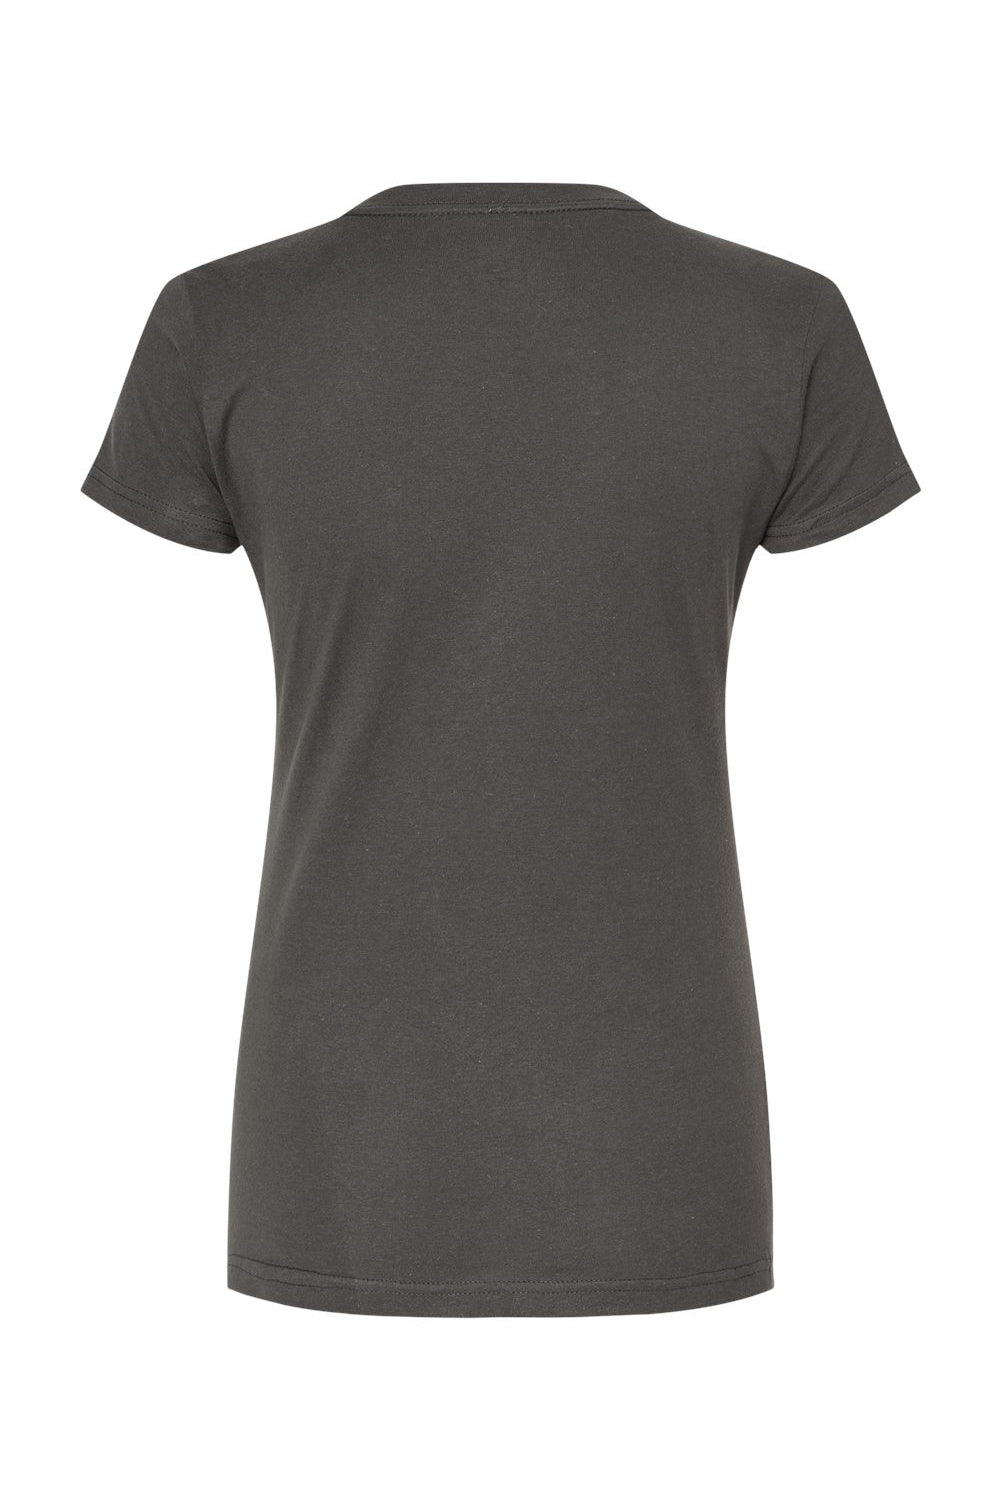 Tultex 213 Womens Fine Jersey Slim Fit Short Sleeve Crewneck T-Shirt Charcoal Grey Flat Back